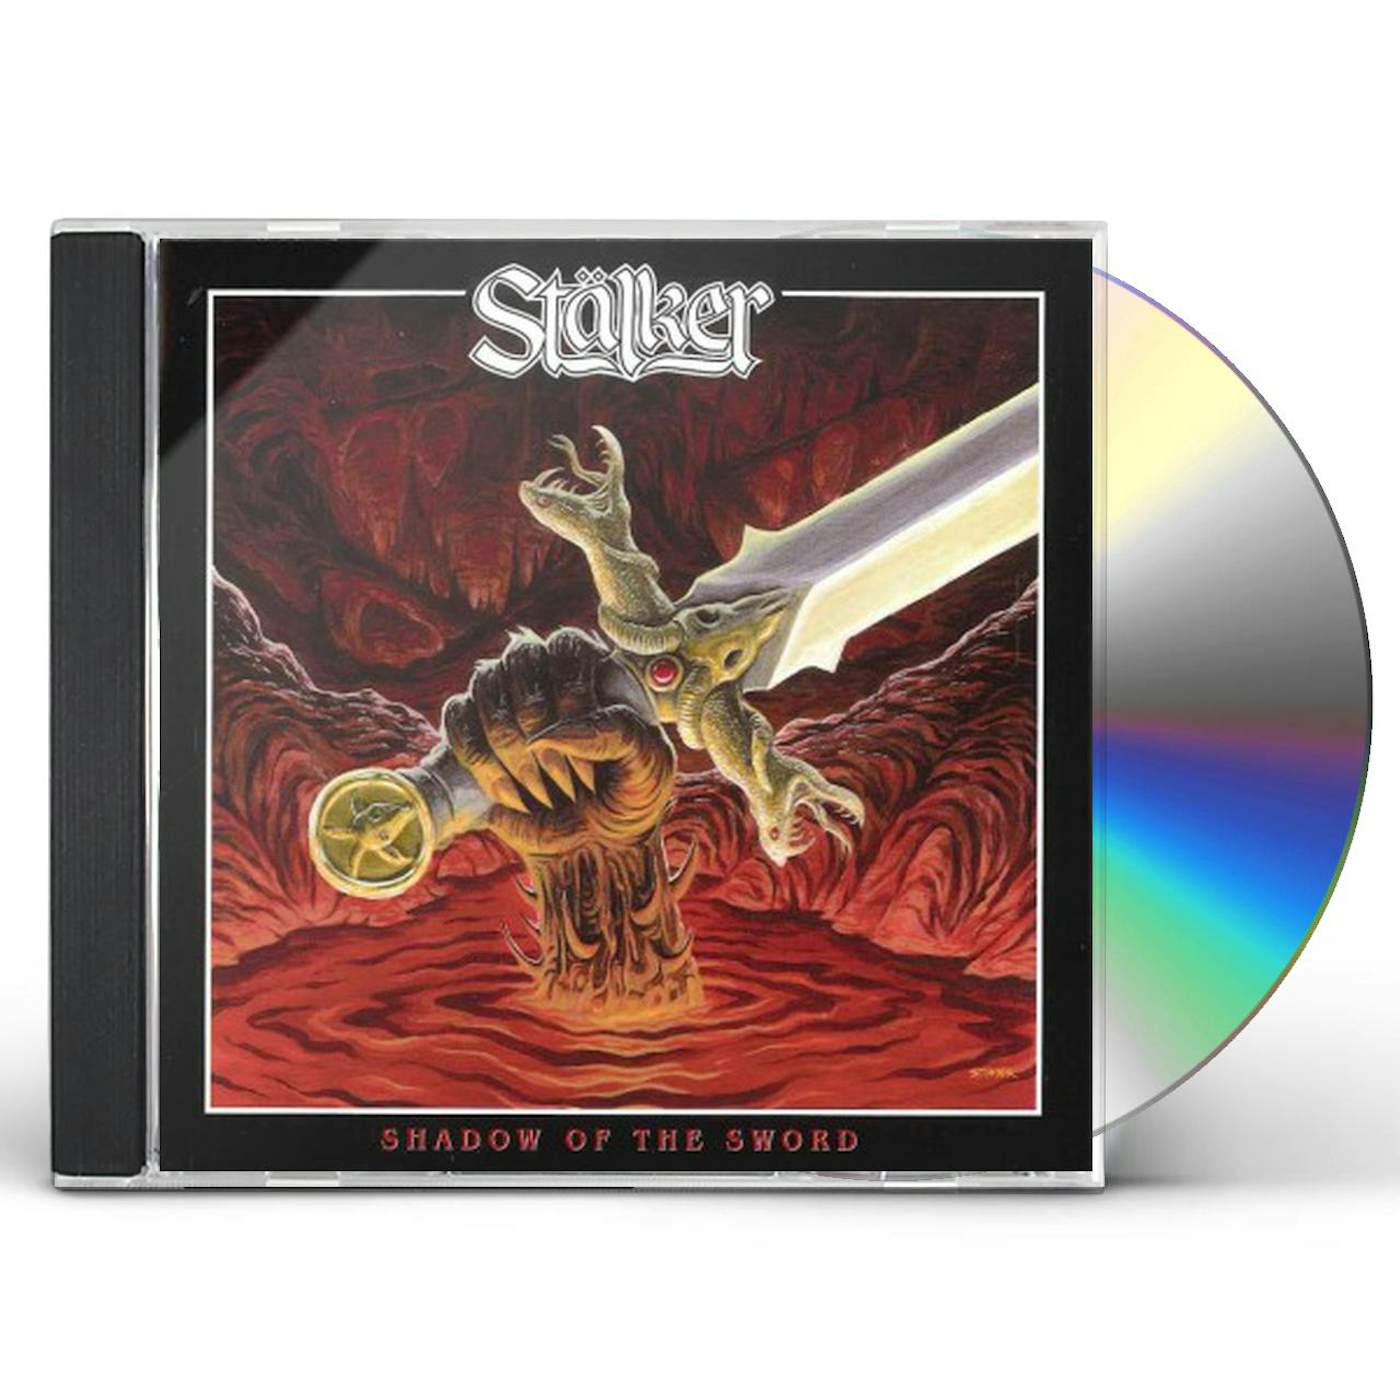 Stalker SHADOW OF THE SWORD CD